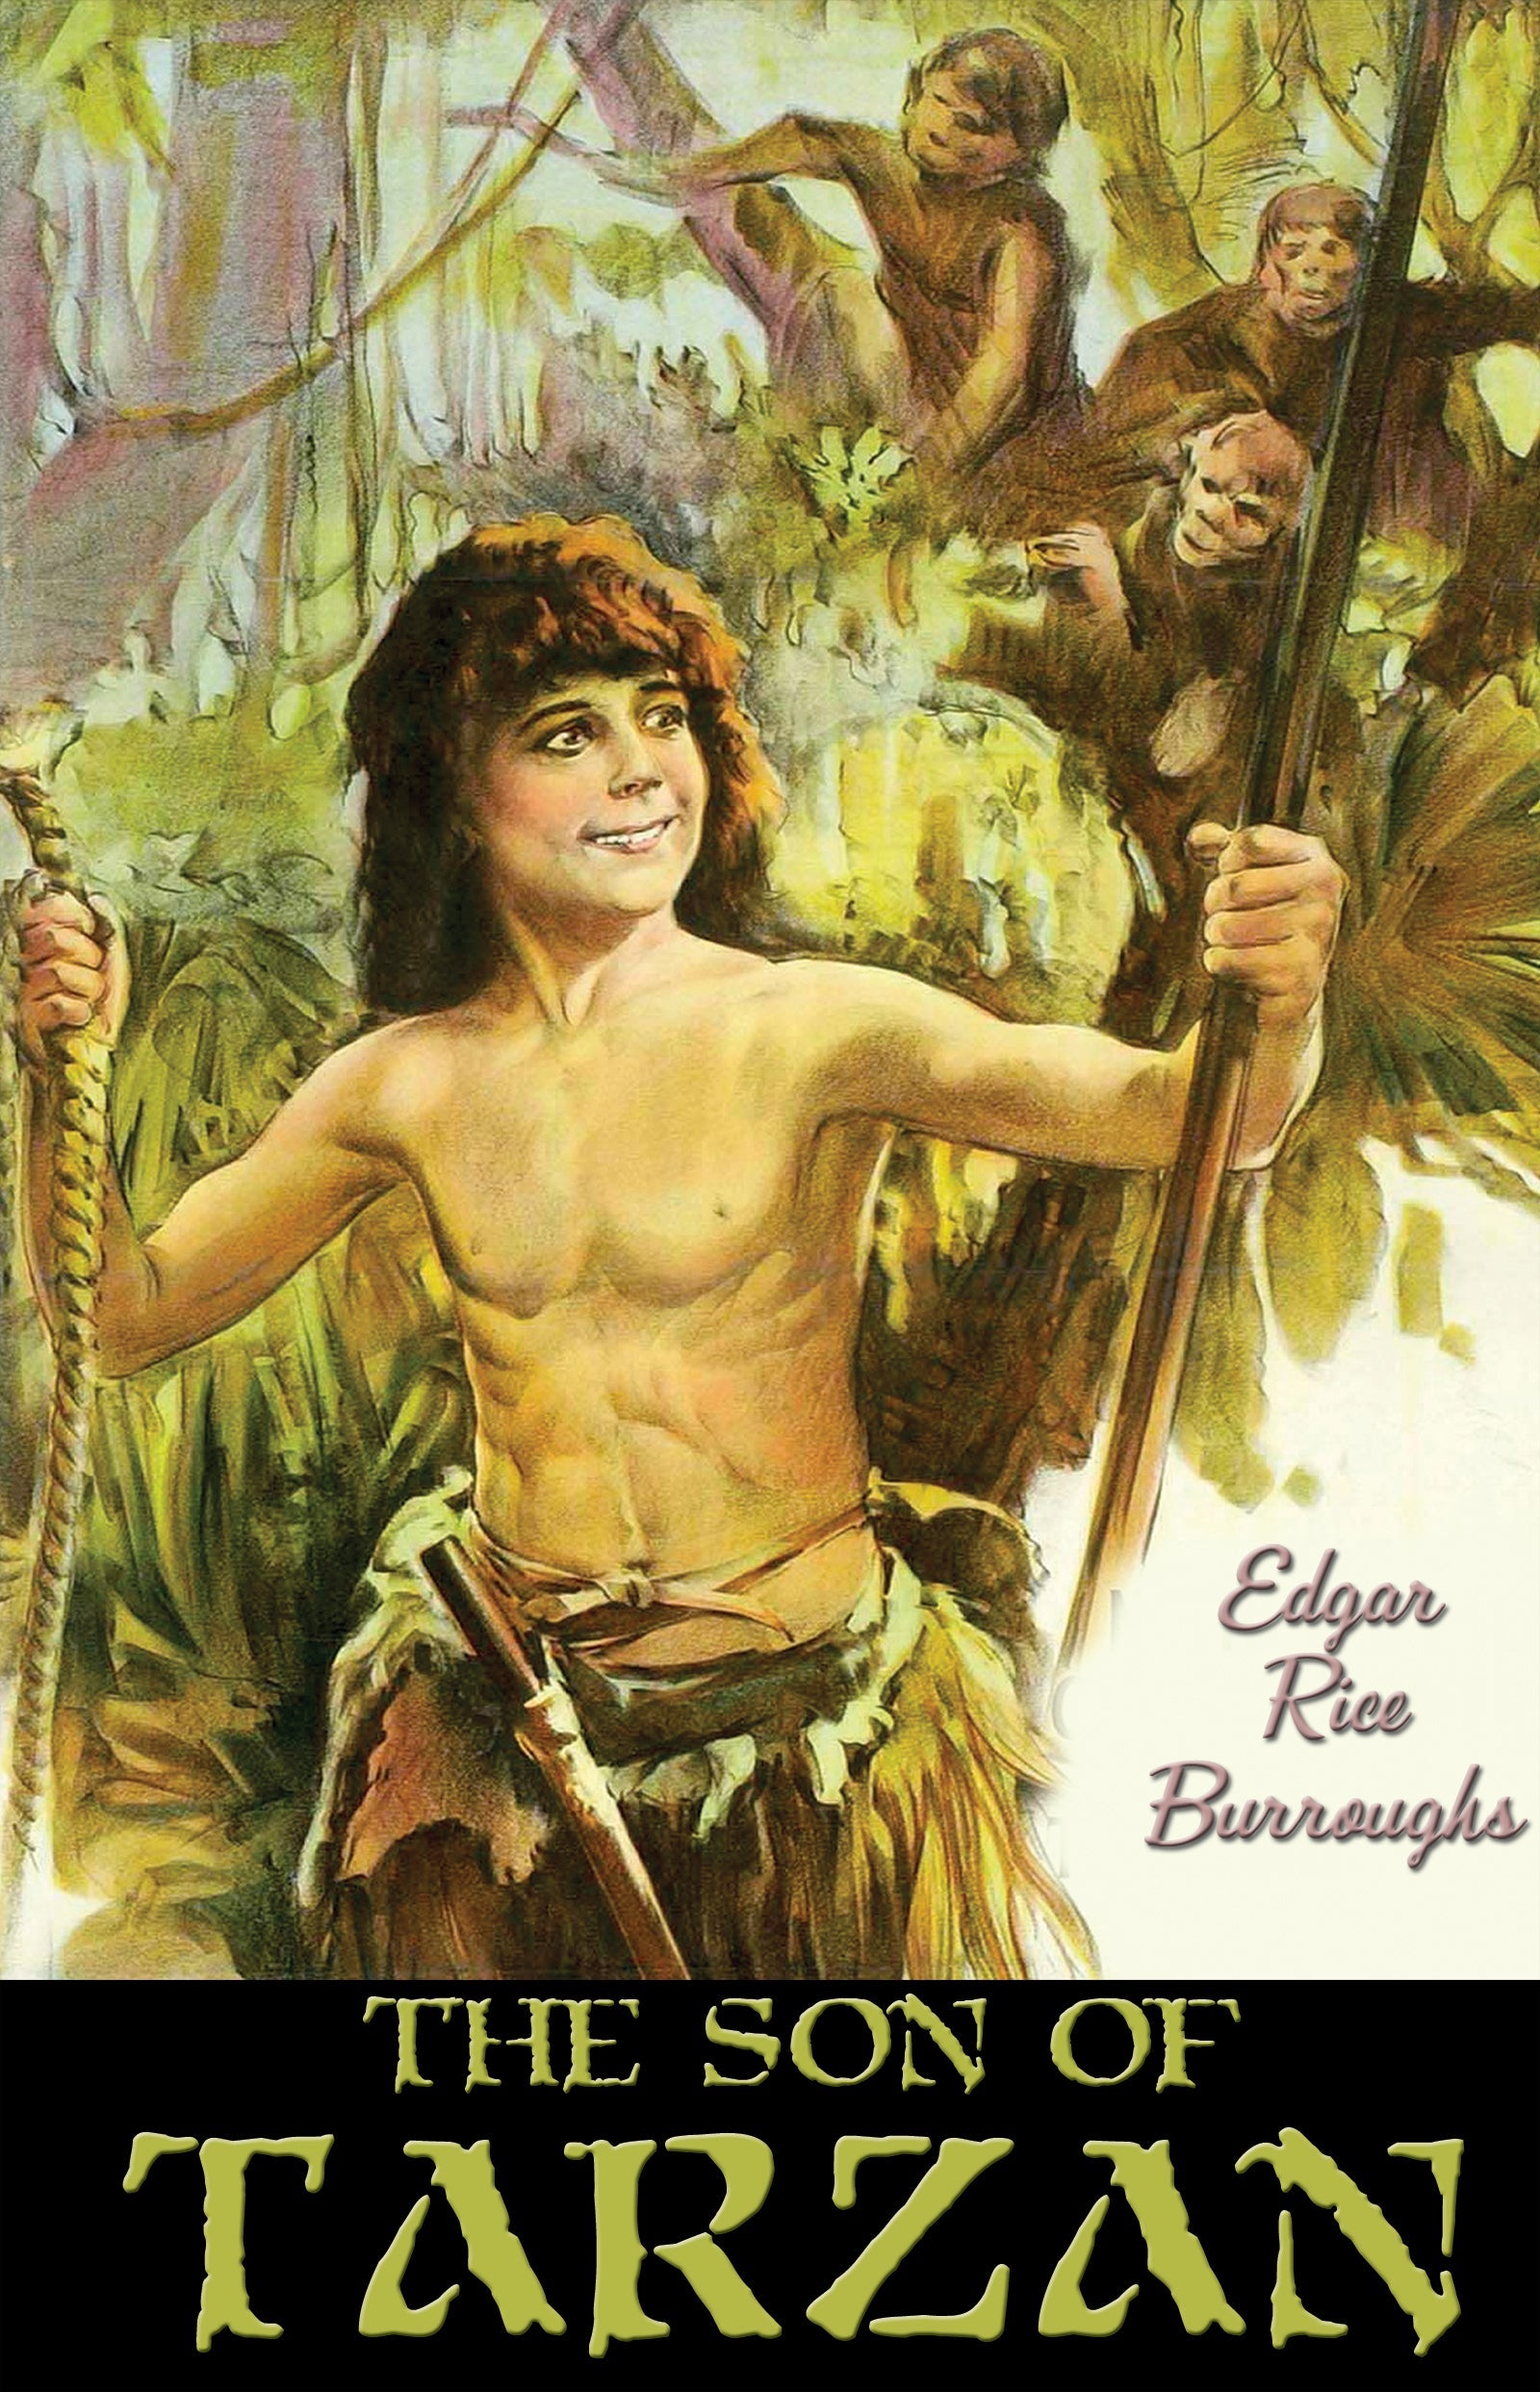 Cover art for The Son Of Tarzan.